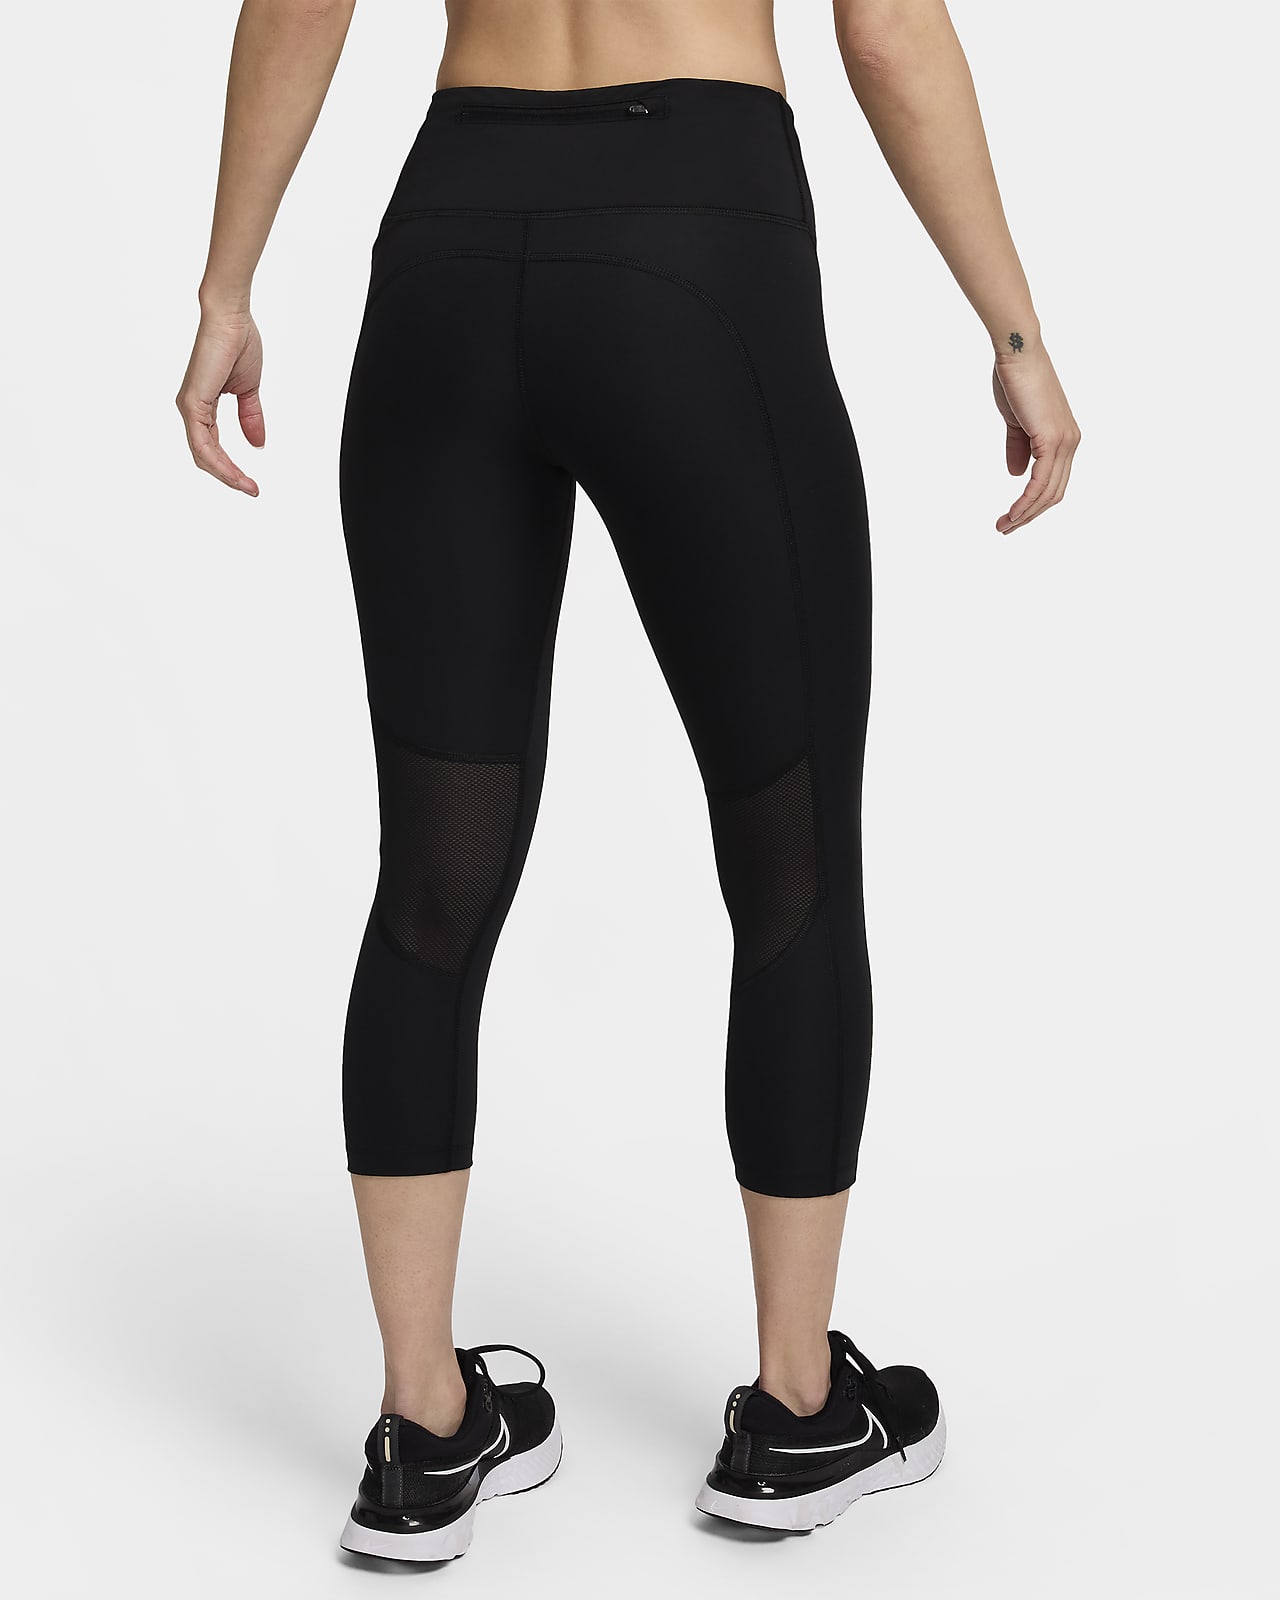 Fit Stripe High Waisted Running Leggings | Спортивная одежда nike, Модели,  Спортивный стиль